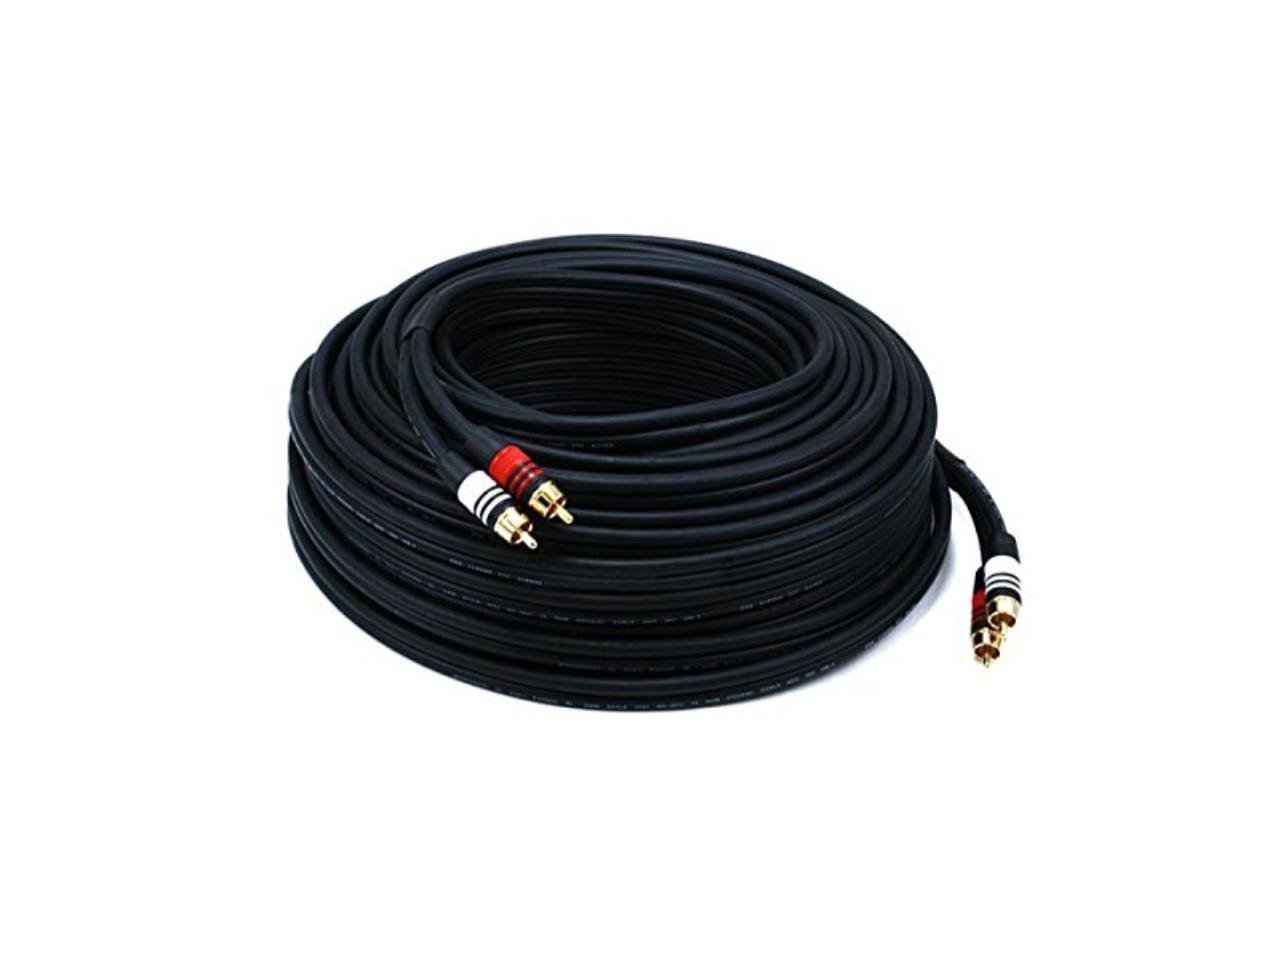 Monoprice Premium RCA Cable - 100 Feet - Black | 2 RCA Plug to 2 RCA Plug, Male to Male, 22AWG - image 2 of 5